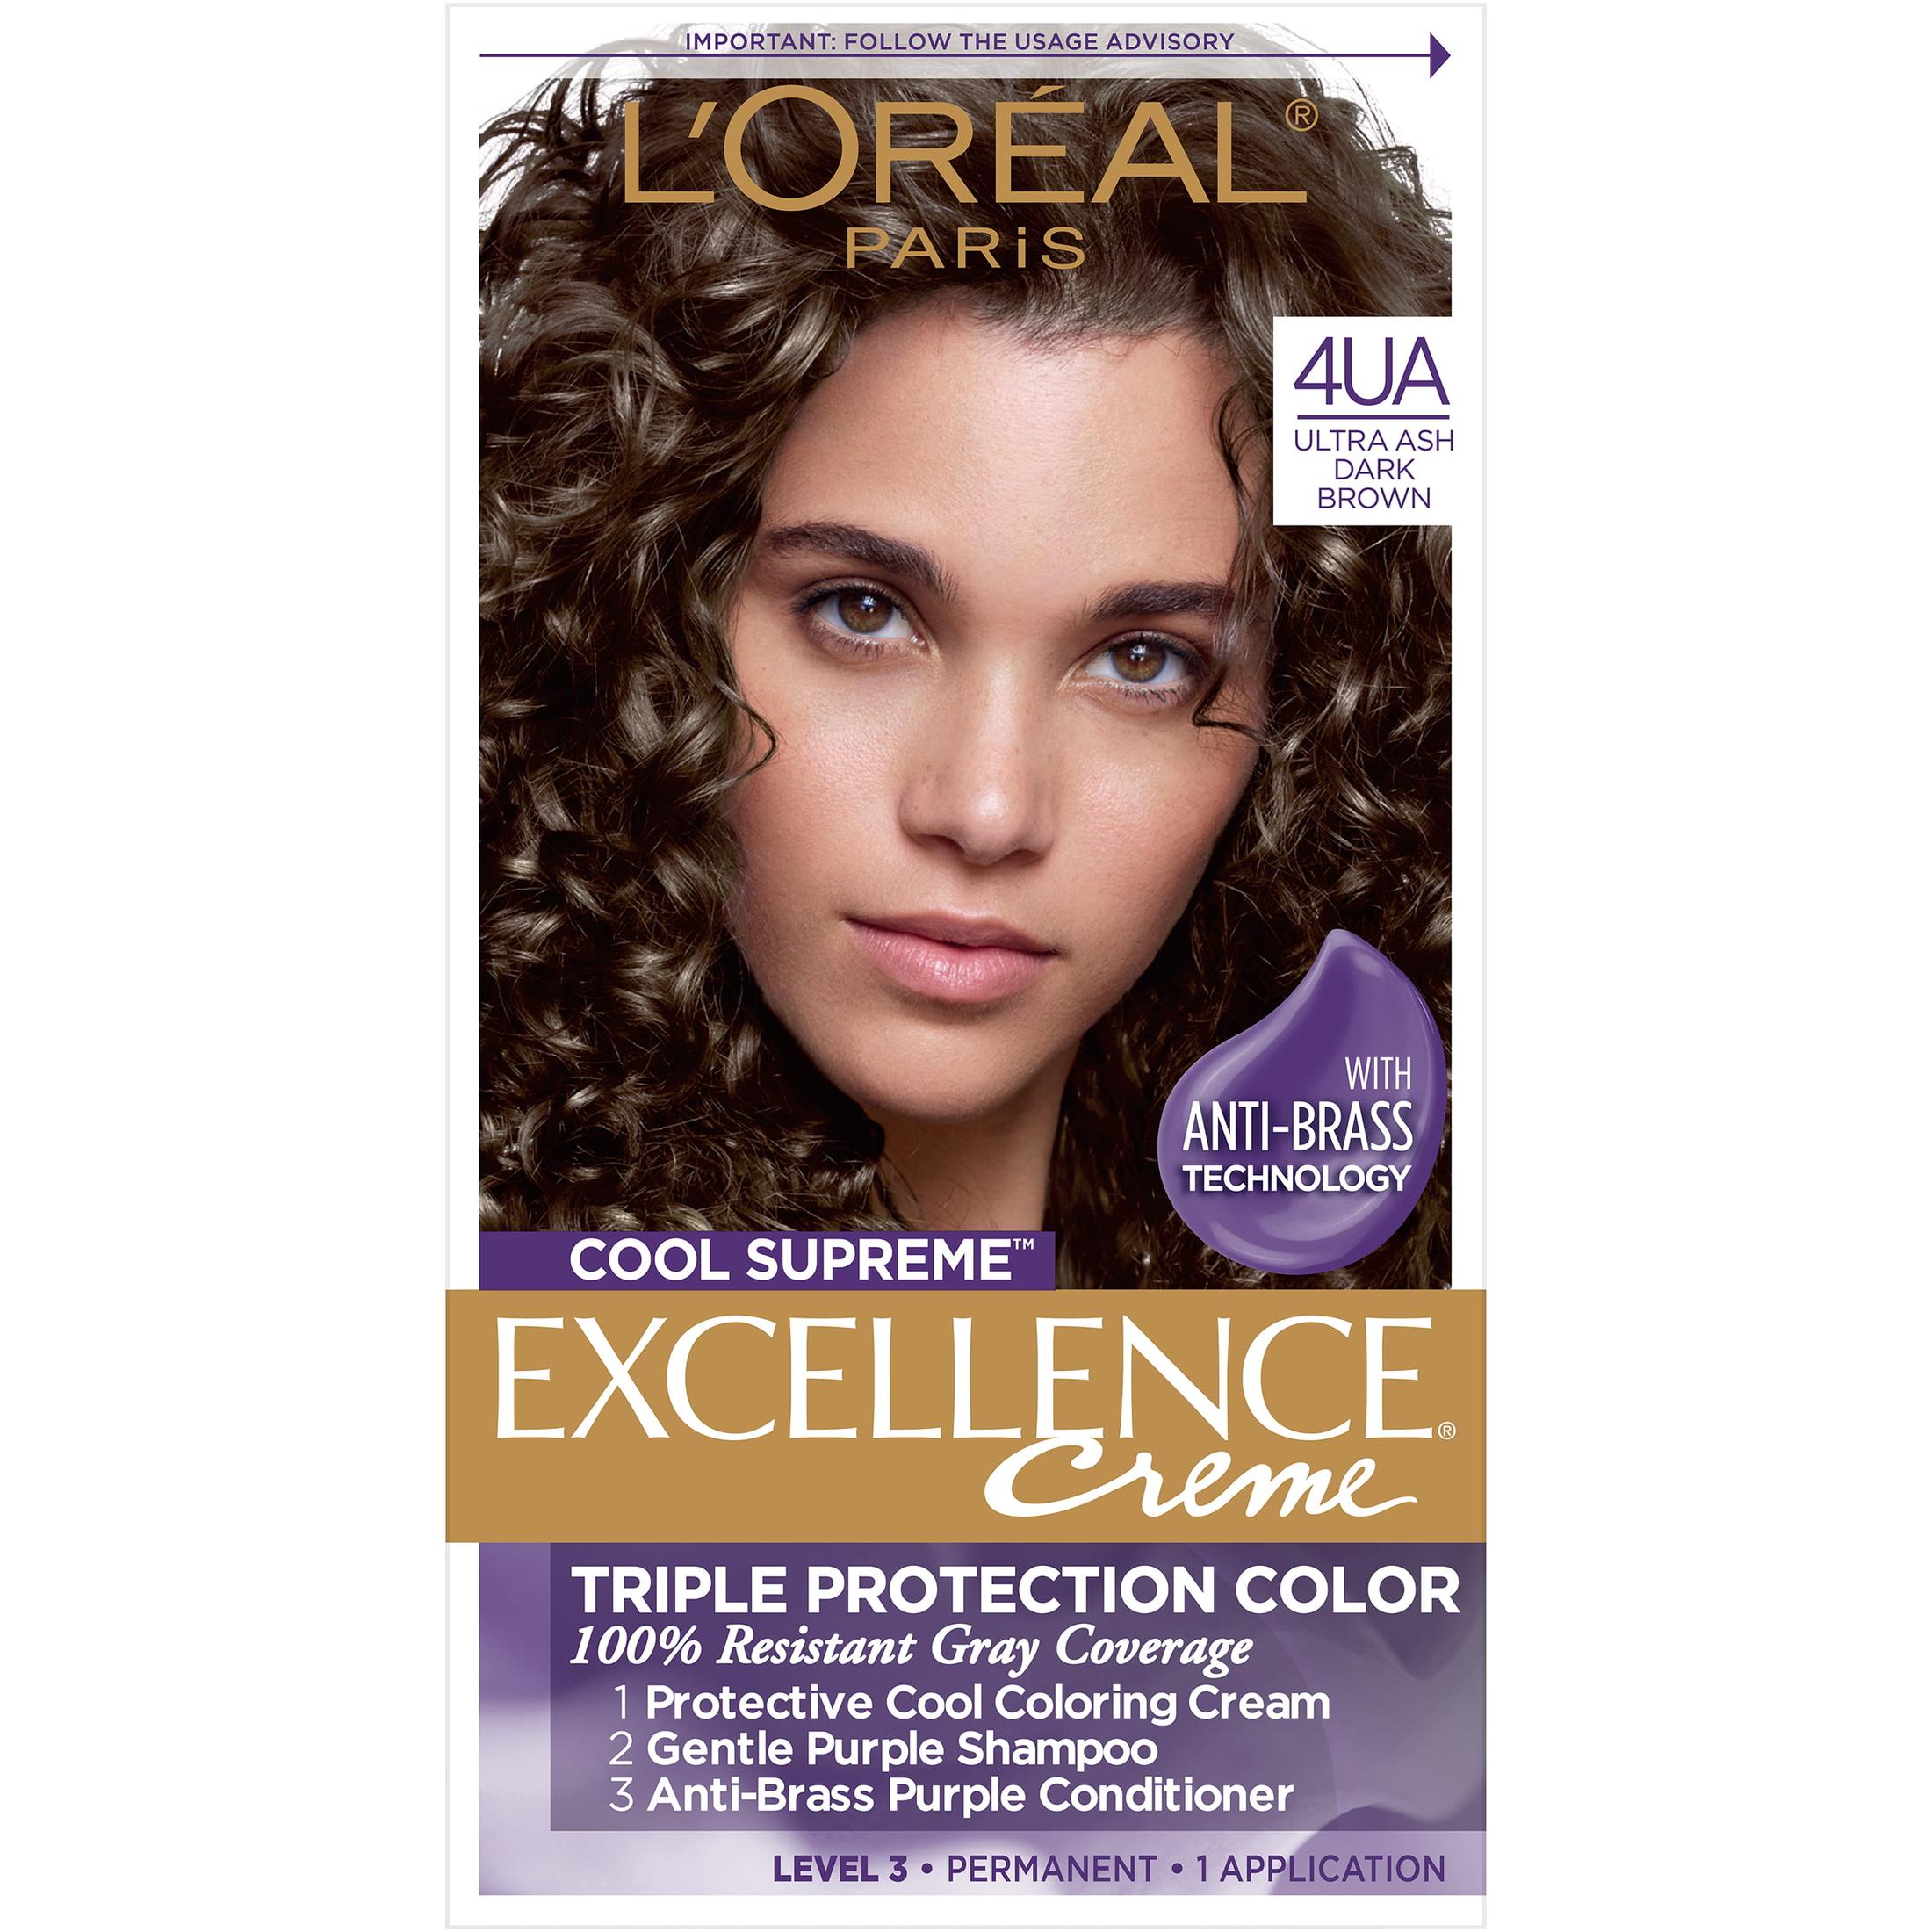 L'Oreal Paris Excellence Creme Permanent Hair Color, Ultra Ash Dark Brown - image 3 of 10